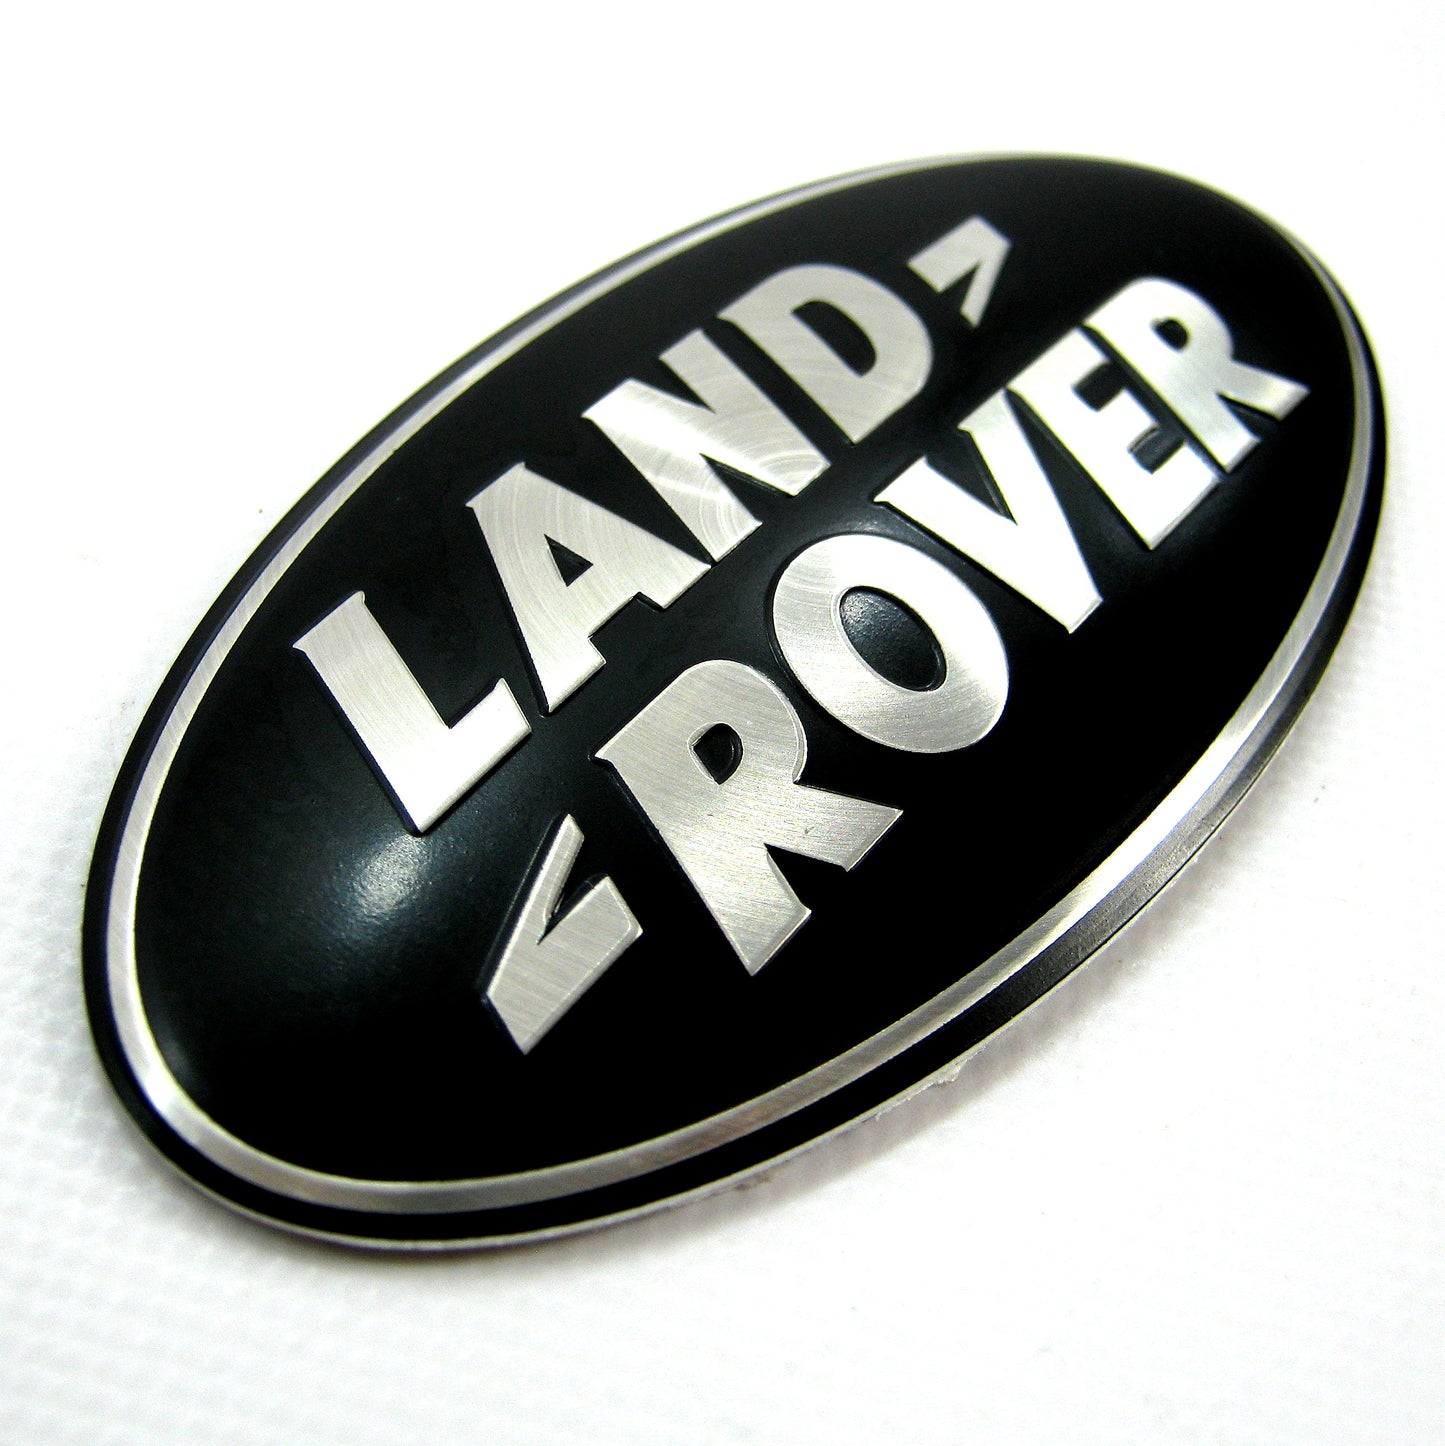 Genuine Front Grille Badge - Black & Silver - for Range Rover P38